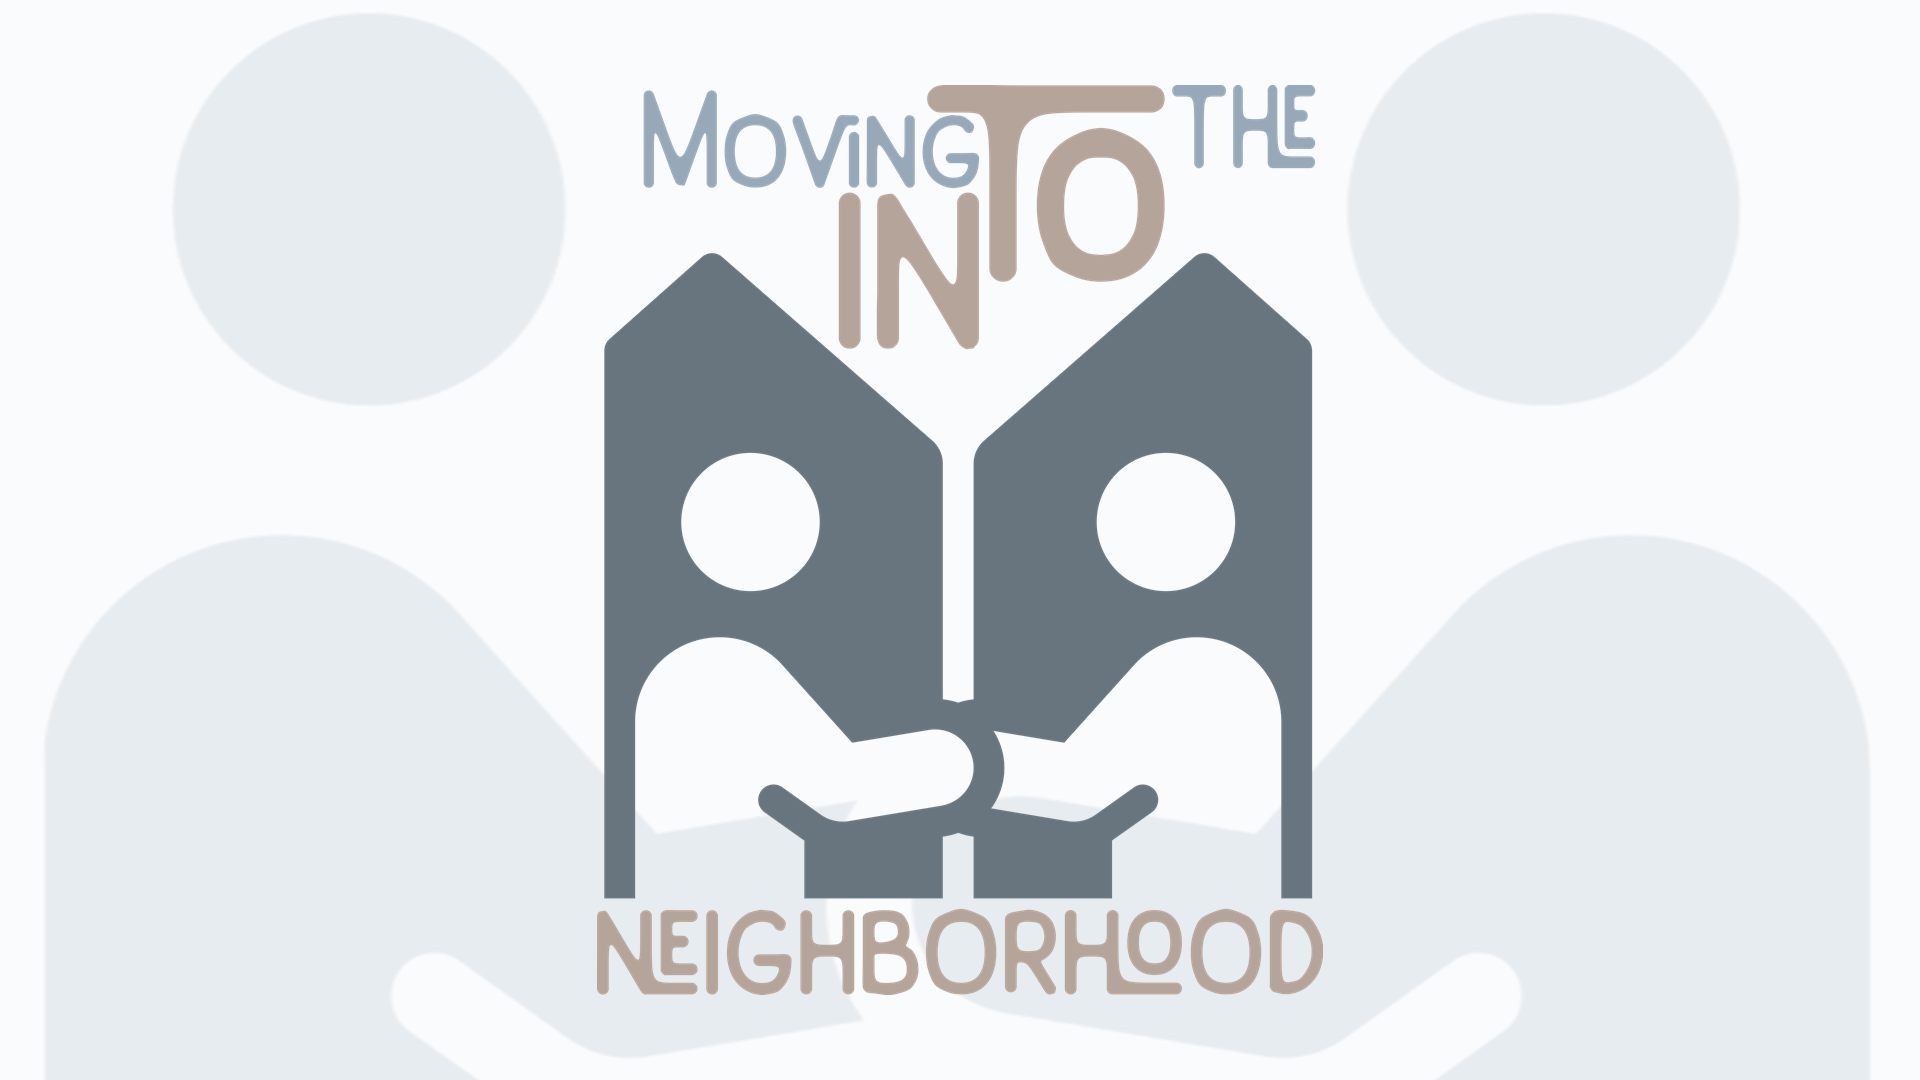 Moving Into the Neighborhood